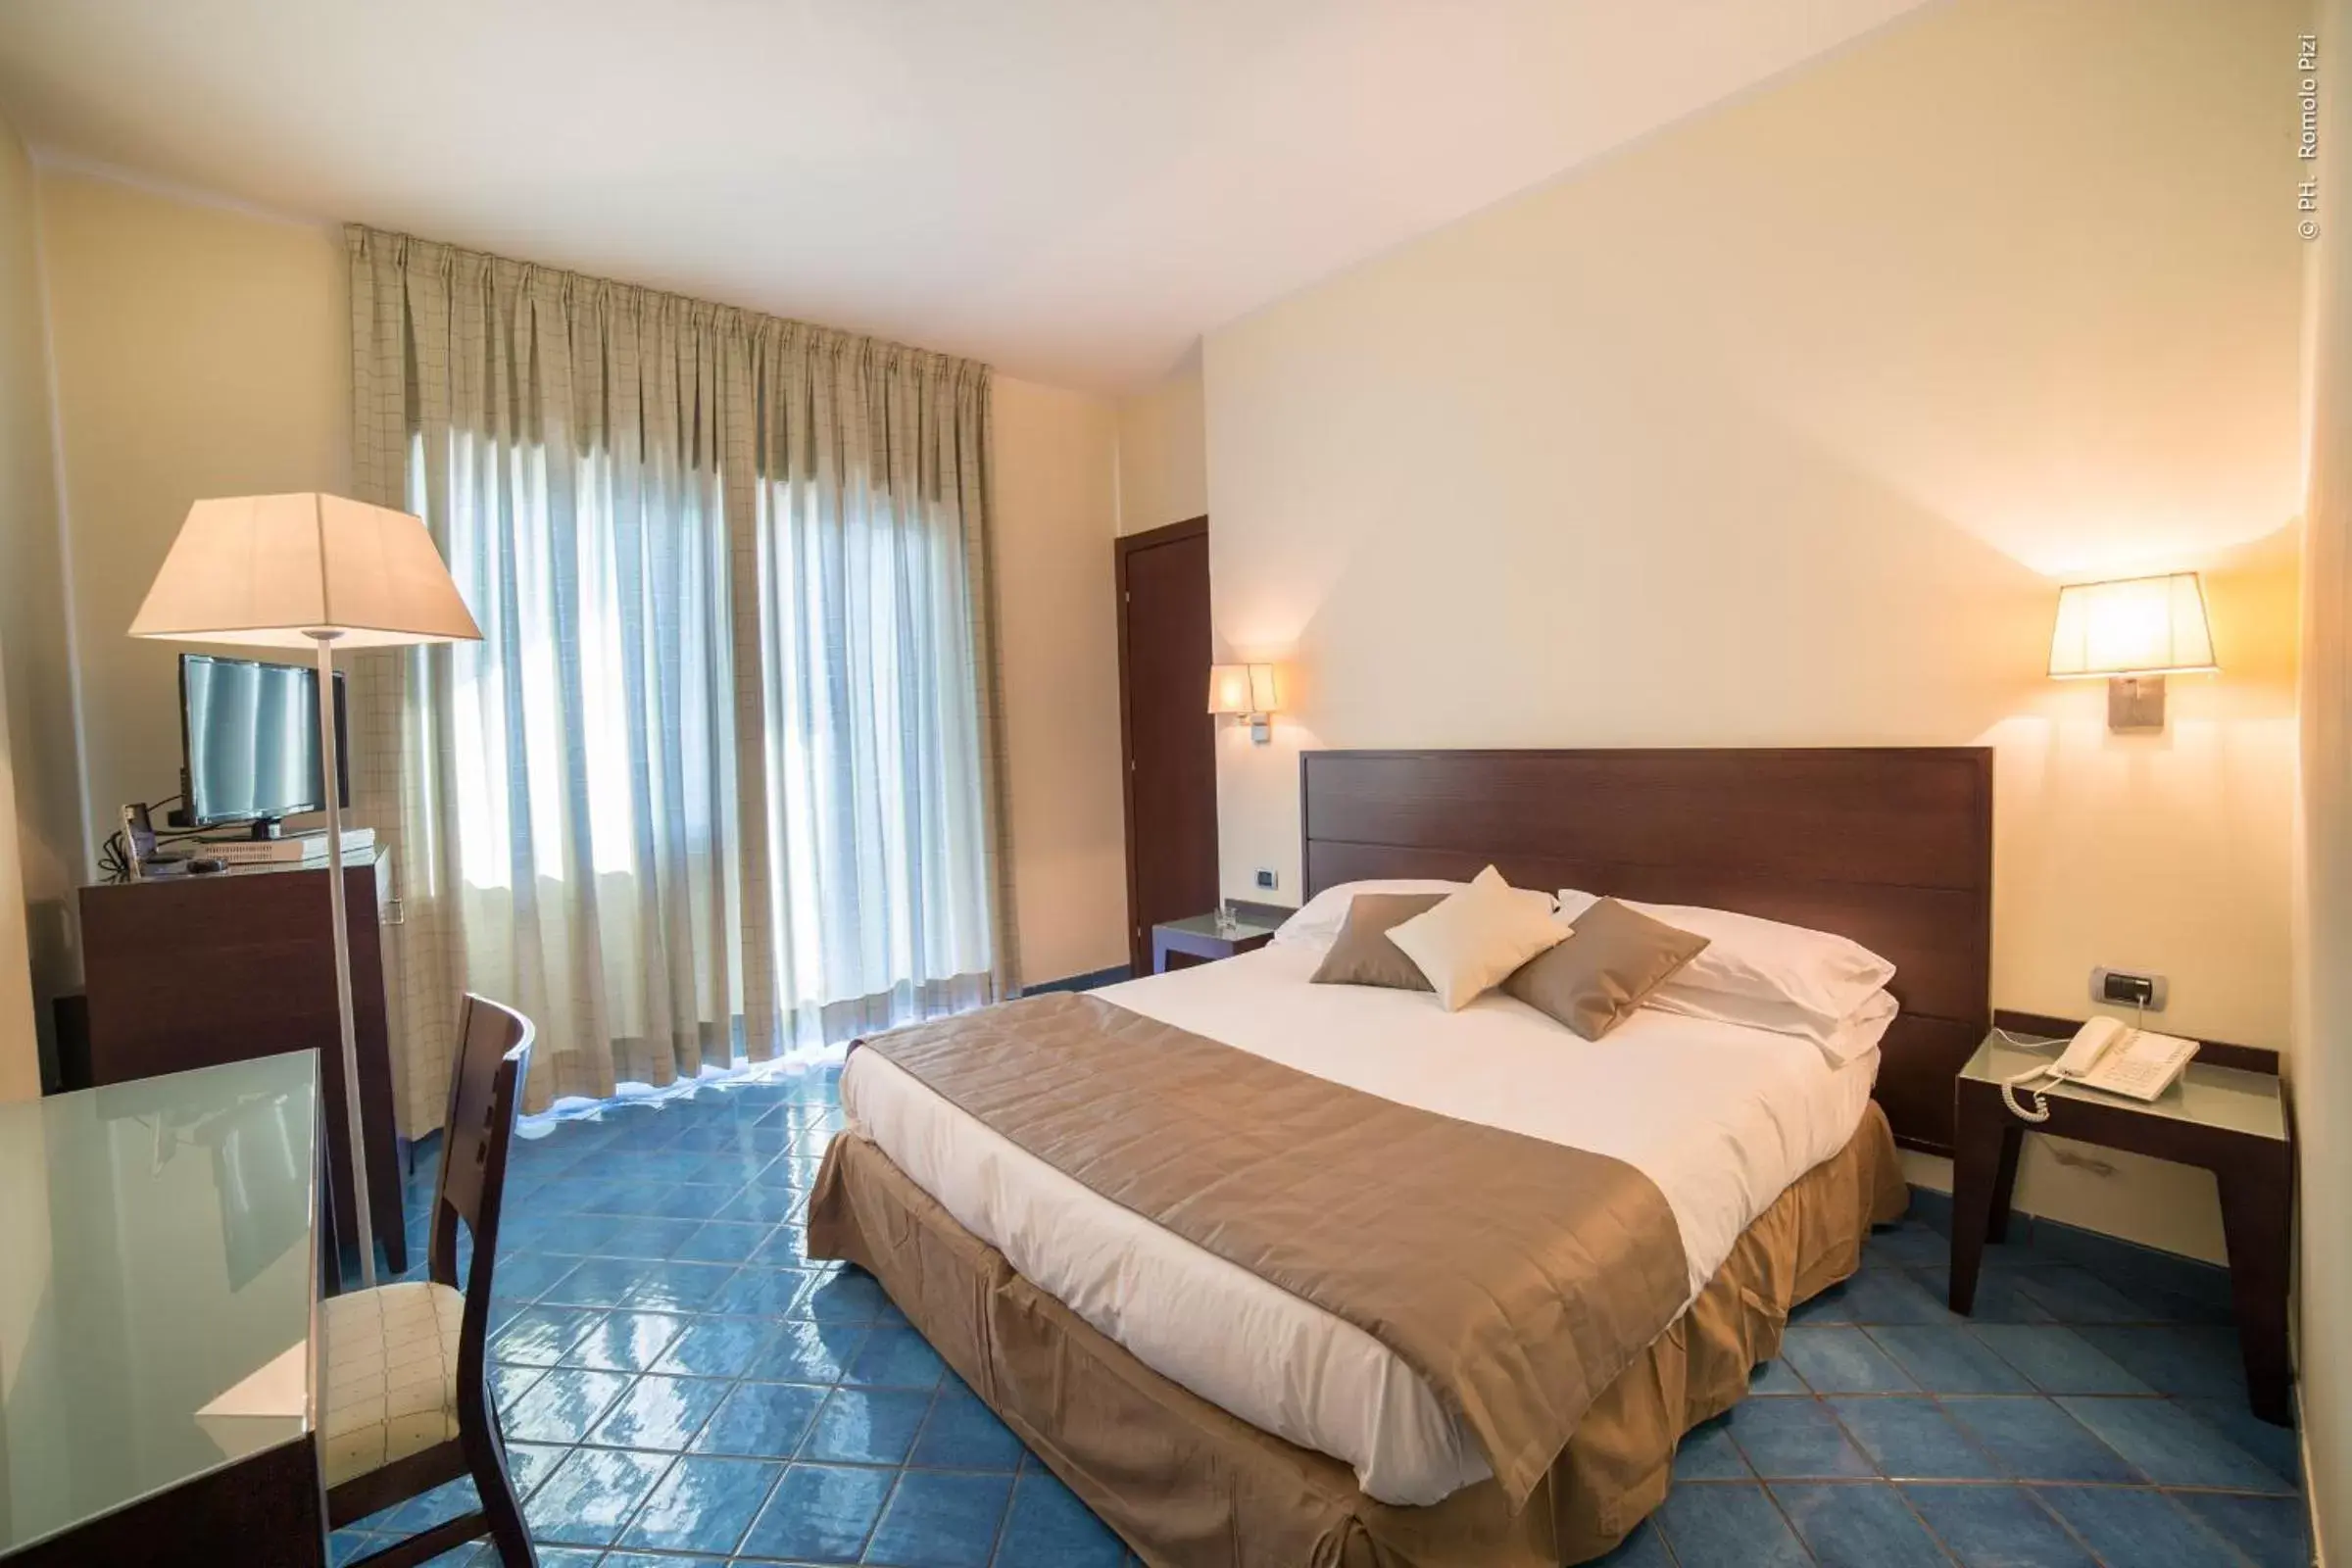 Bed, Room Photo in Hotel La Lucertola